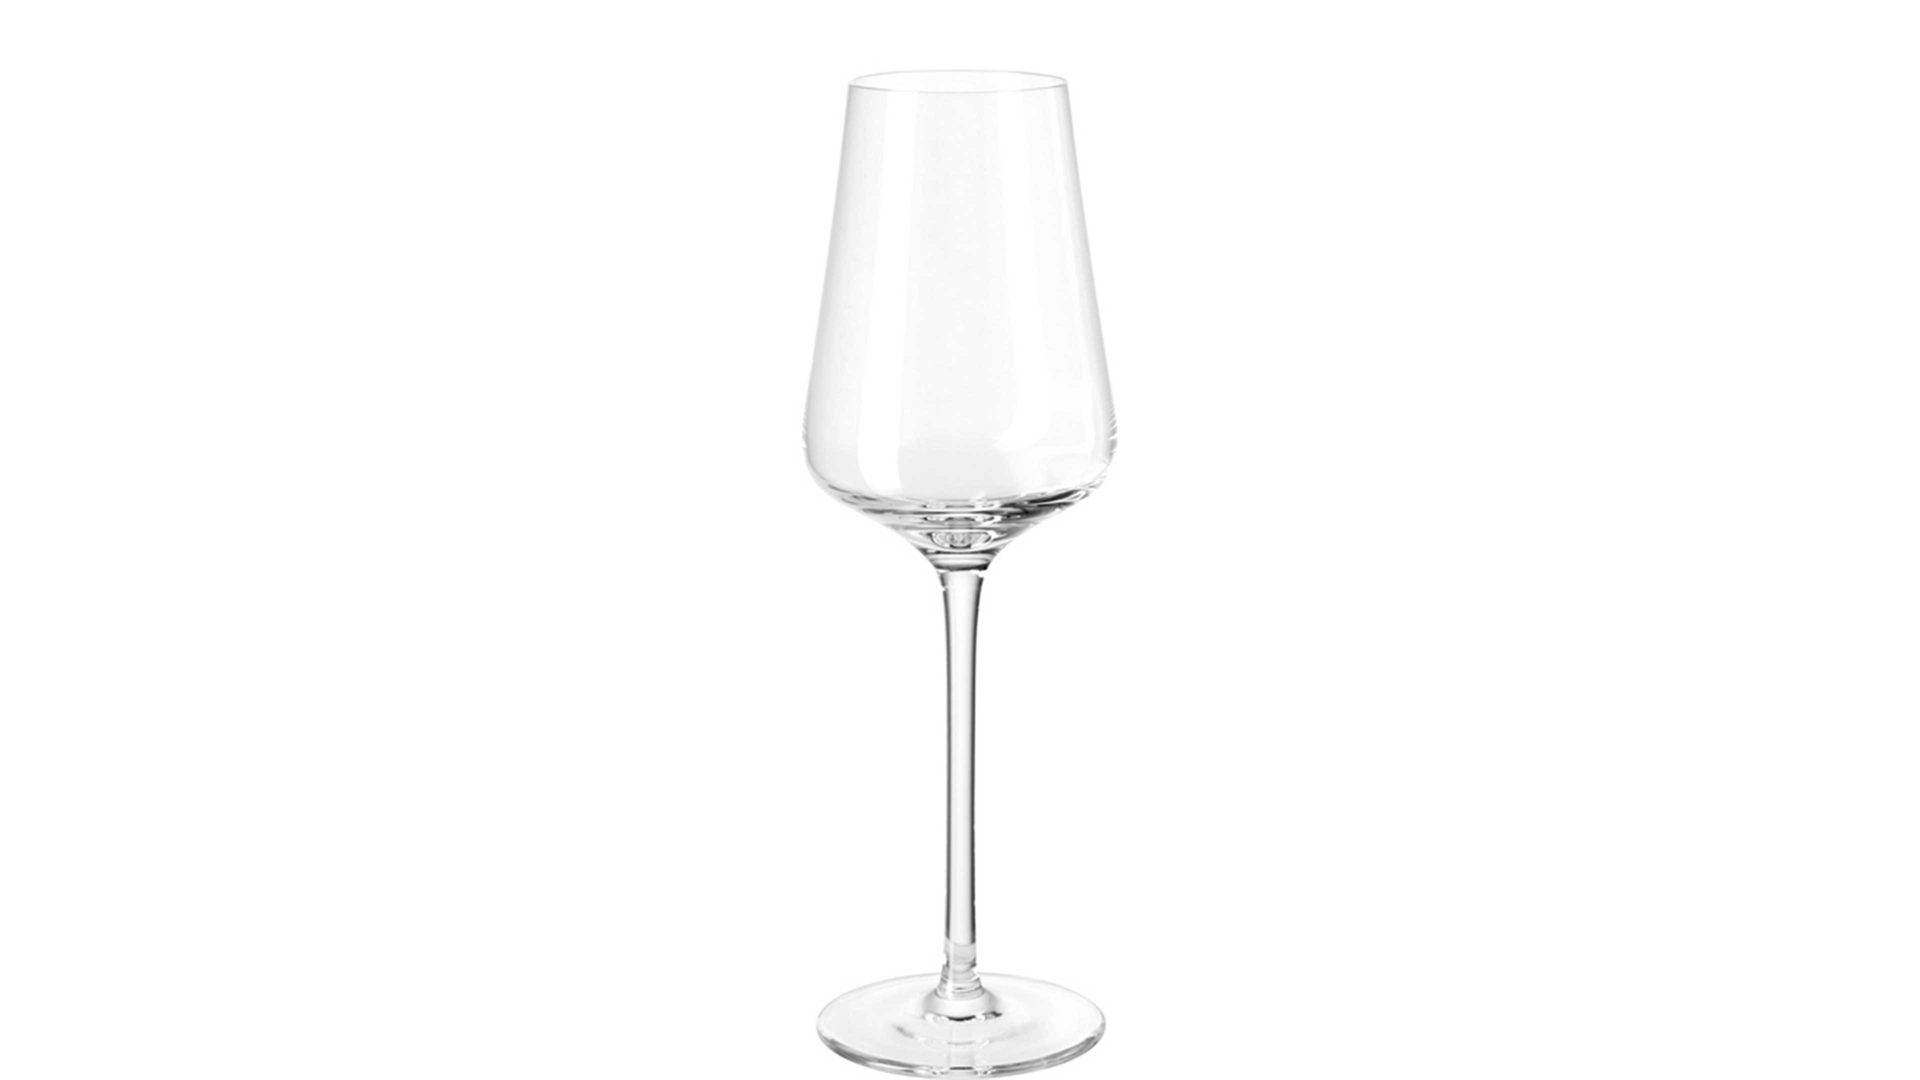 Digestifglas Leonardo | glaskoch aus Glas in Transparent LEONARDO Digestifglas Puccini TEQTON®-Kristallglas – Fassungvermögen ca. 220 ml